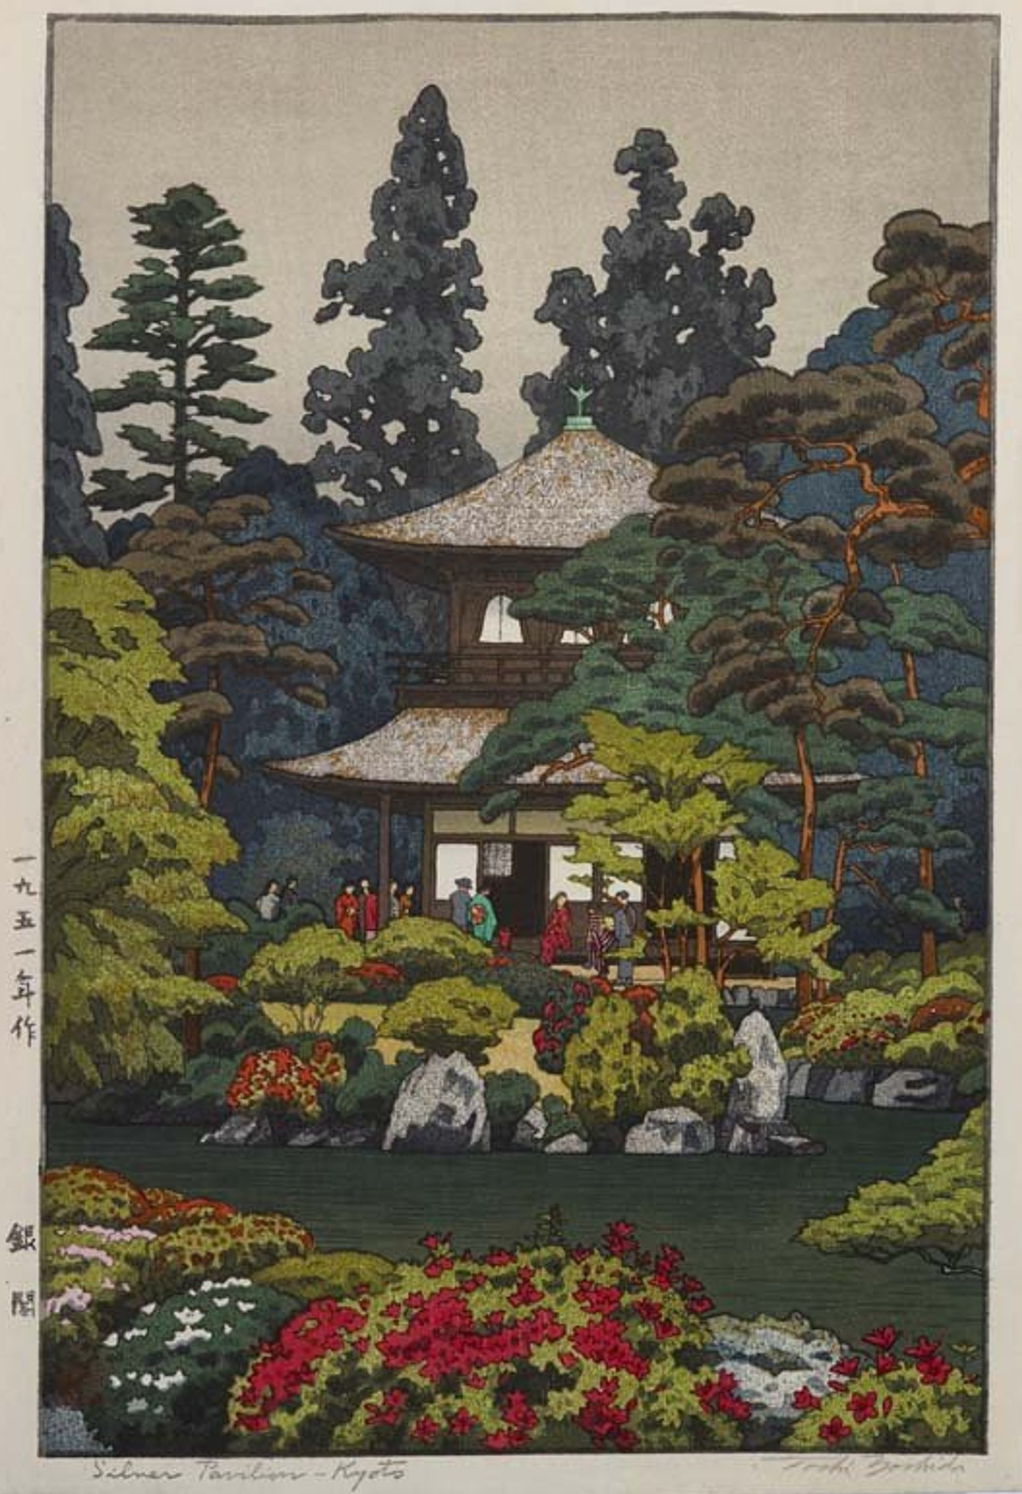 Toshi Yoshida “Silver Pavilion - Kyoto” 1951 woodblock print